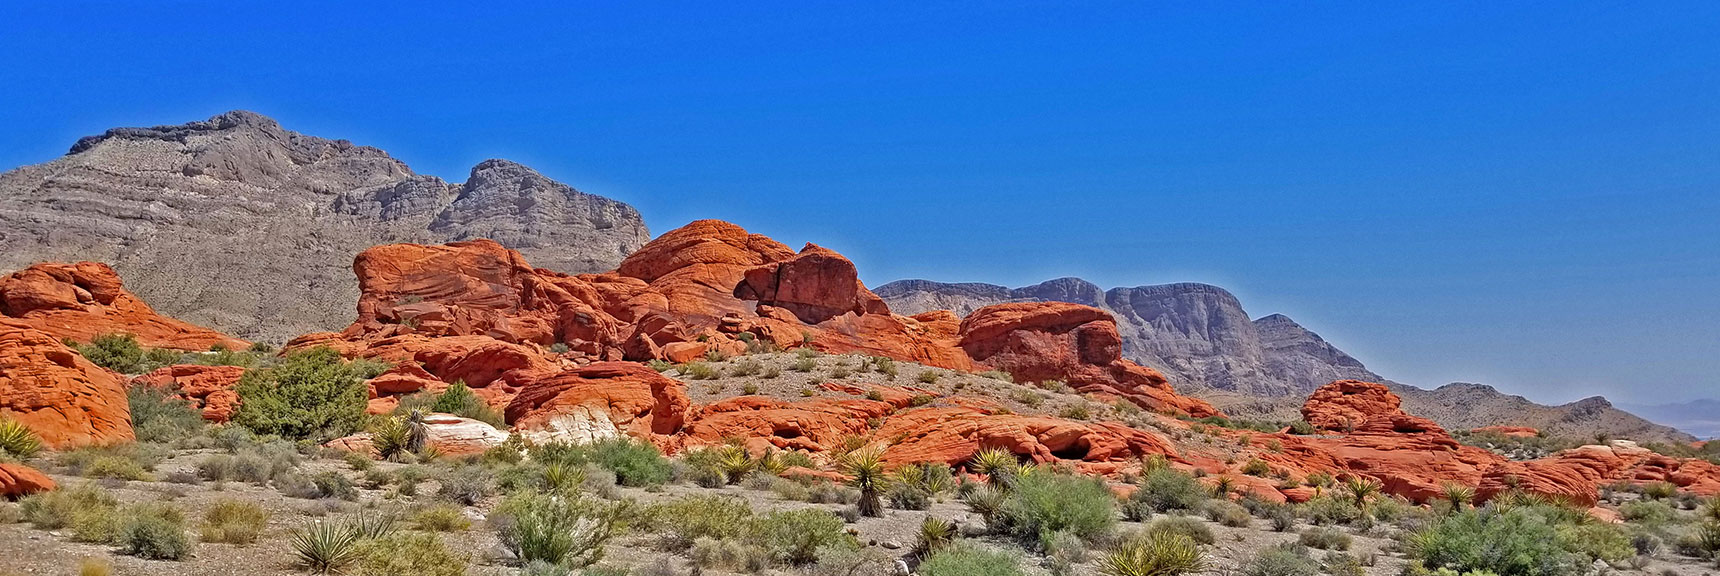 View North Toward Canyon Rim | Little Red Rock Las Vegas, Nevada, Near La Madre Mountains Wilderness